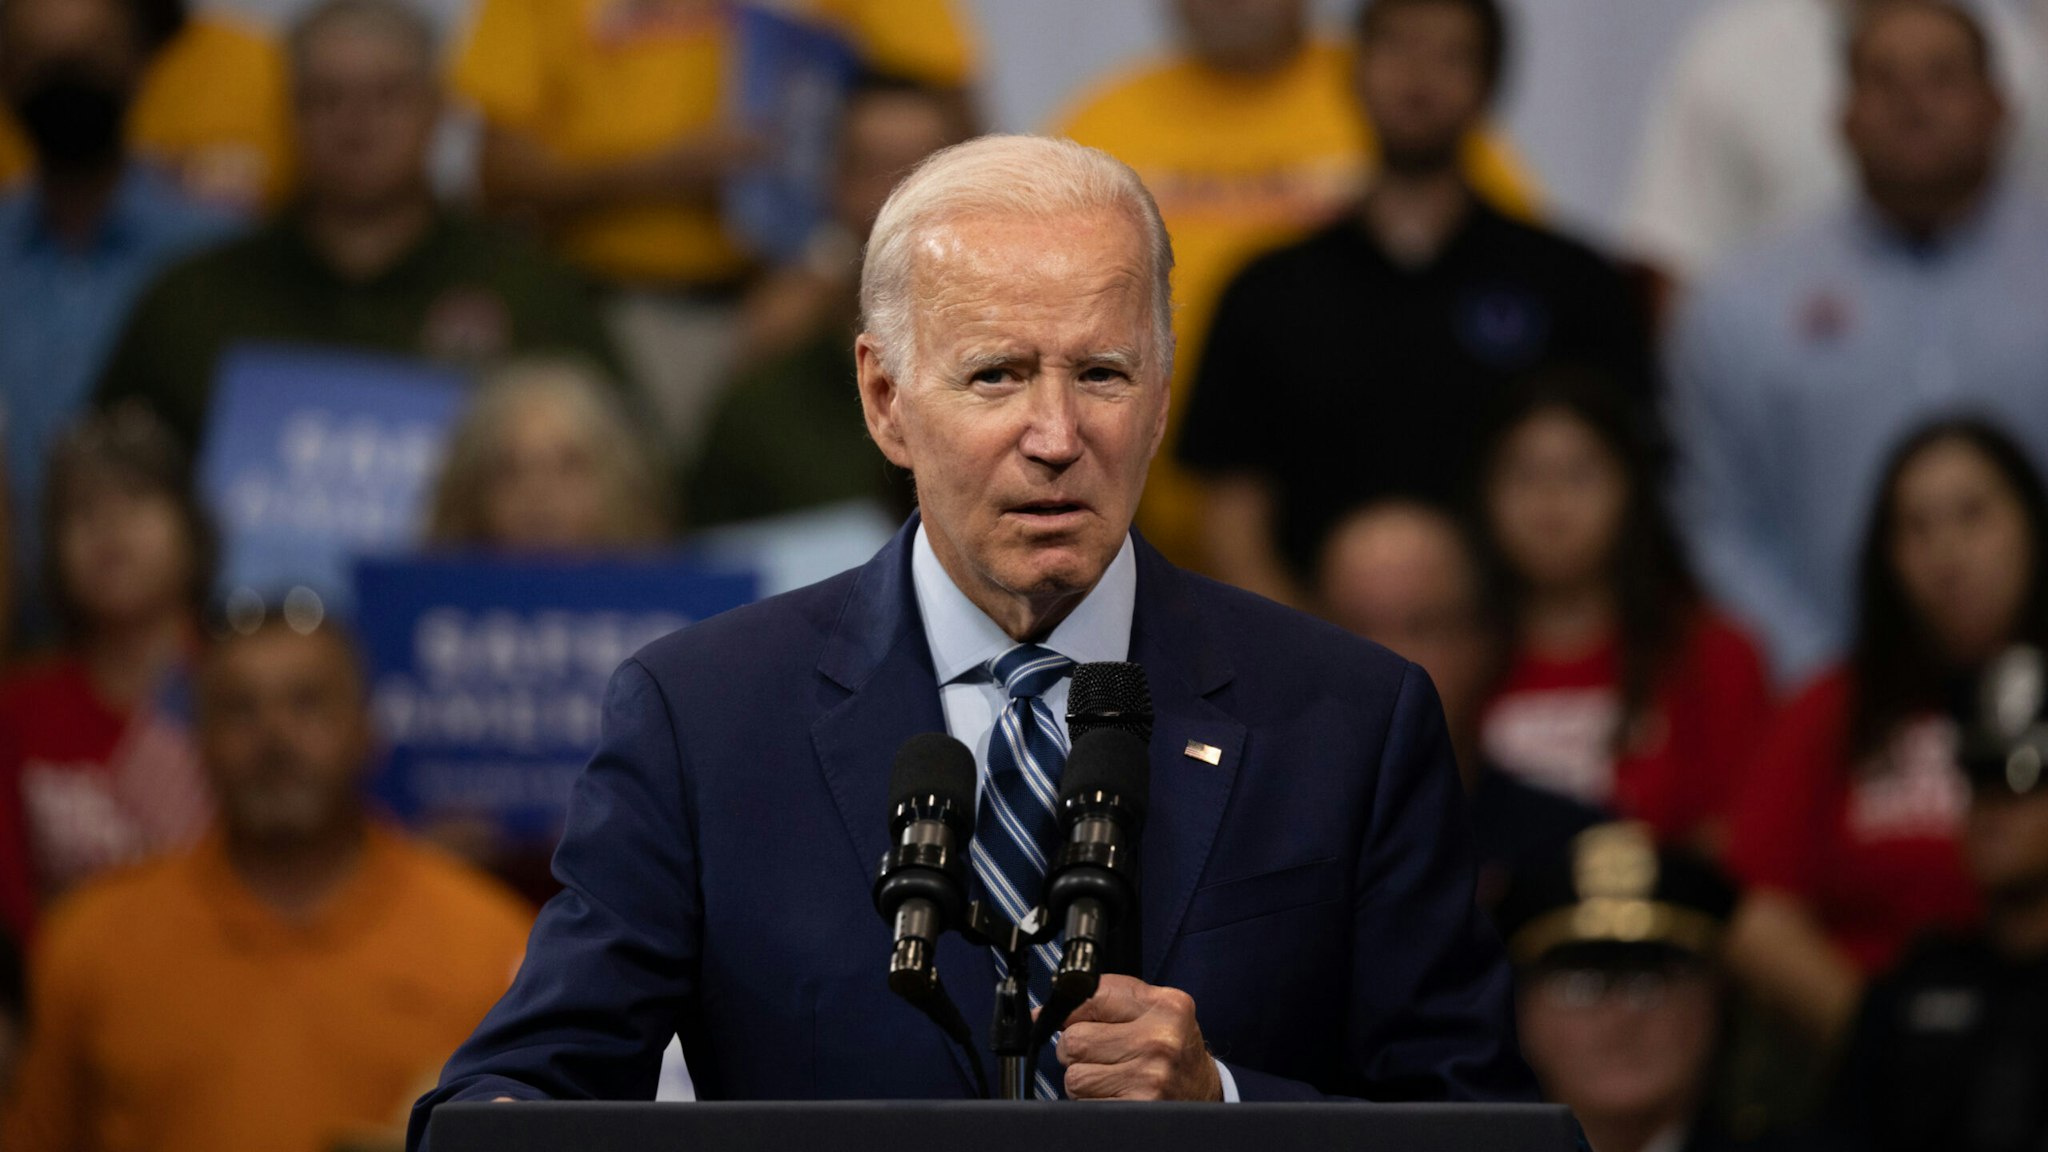 US President Joe Biden speaks at the Arnaud C. Marts Center in Wilkes-Barre, Pennsylvania, US, on Tuesday, Aug. 30, 2022.